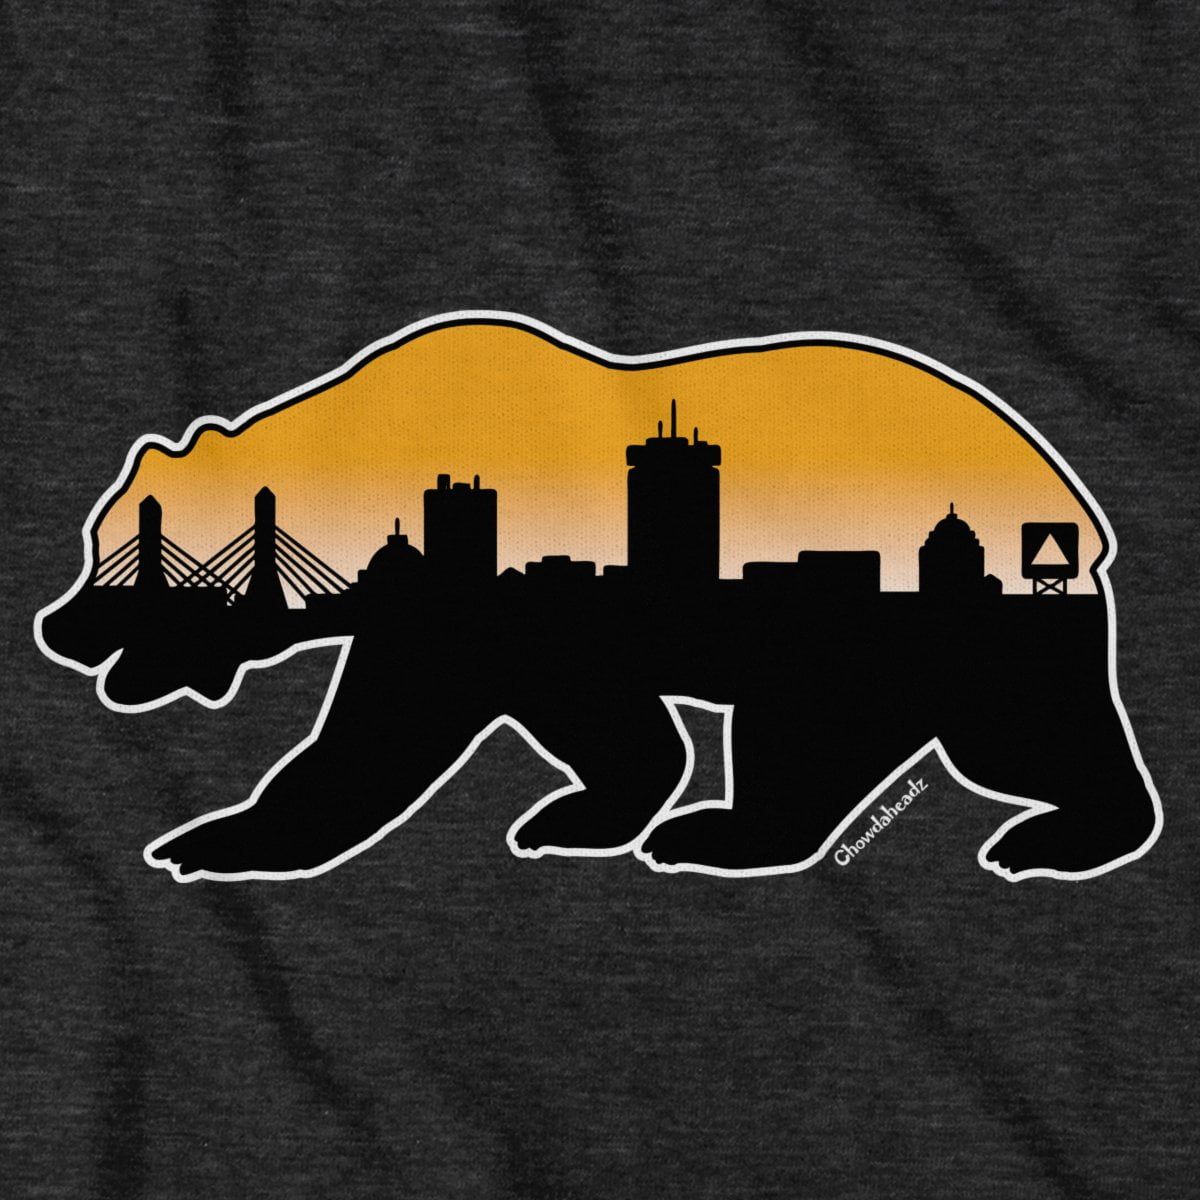 Boston Bear Skyline T-Shirt - Chowdaheadz